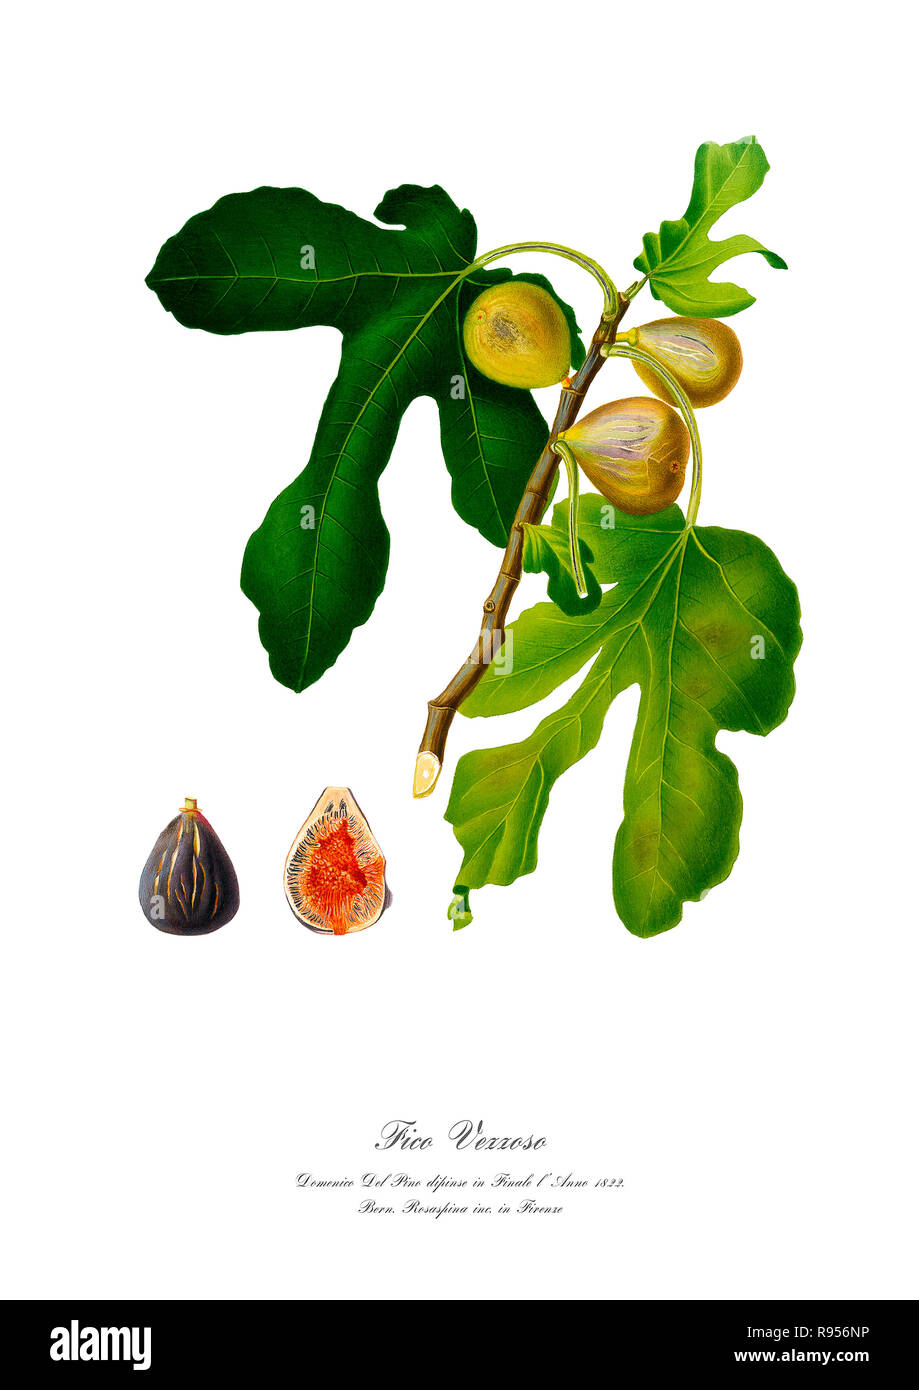 Vintage unique botanical illustration of a figs Stock Photo